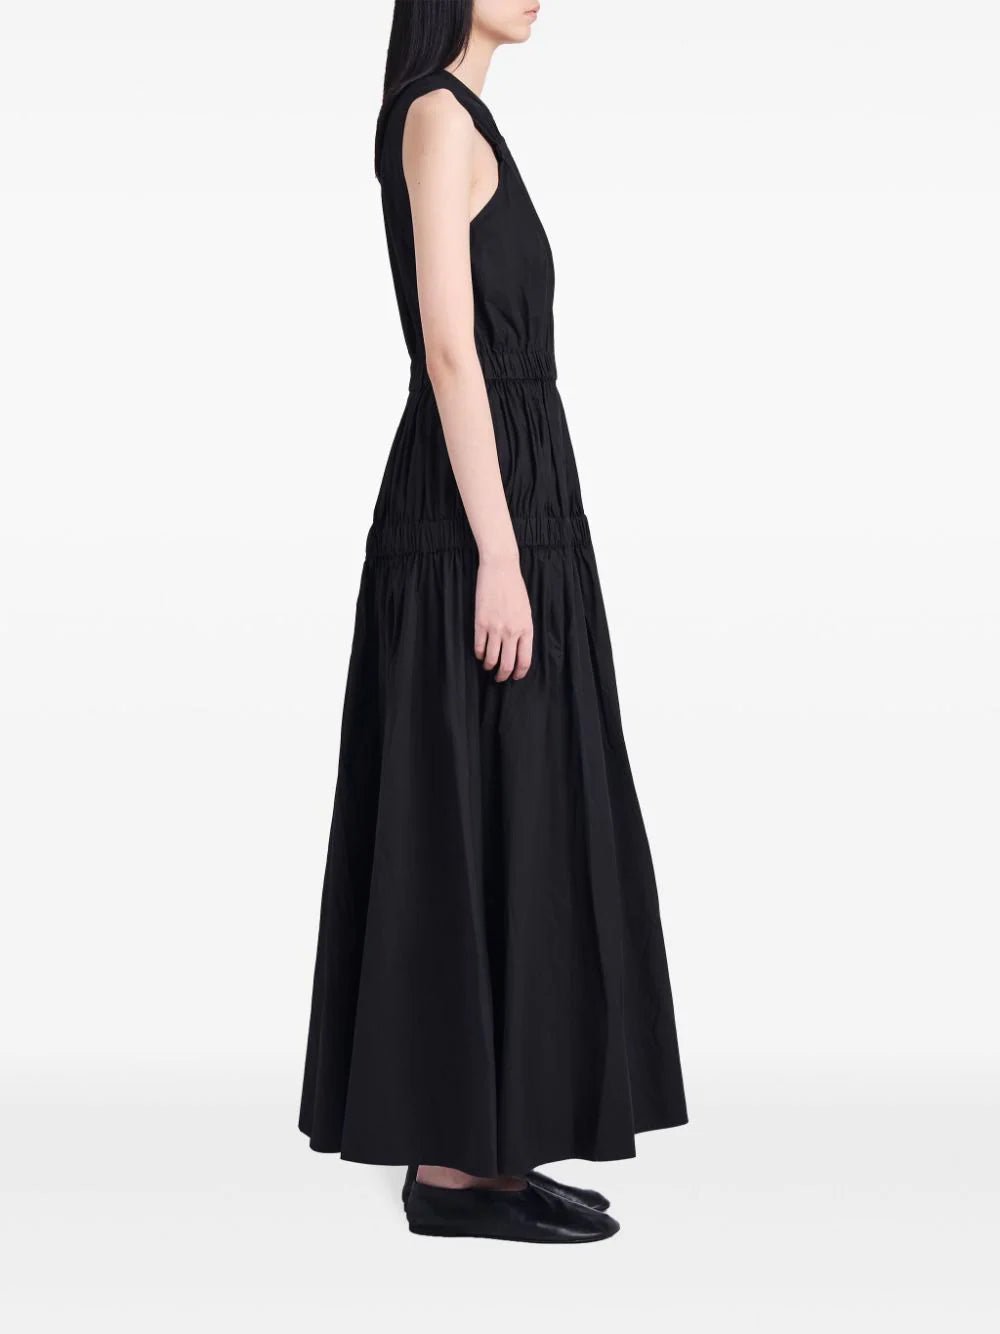 Libby Dress in Black